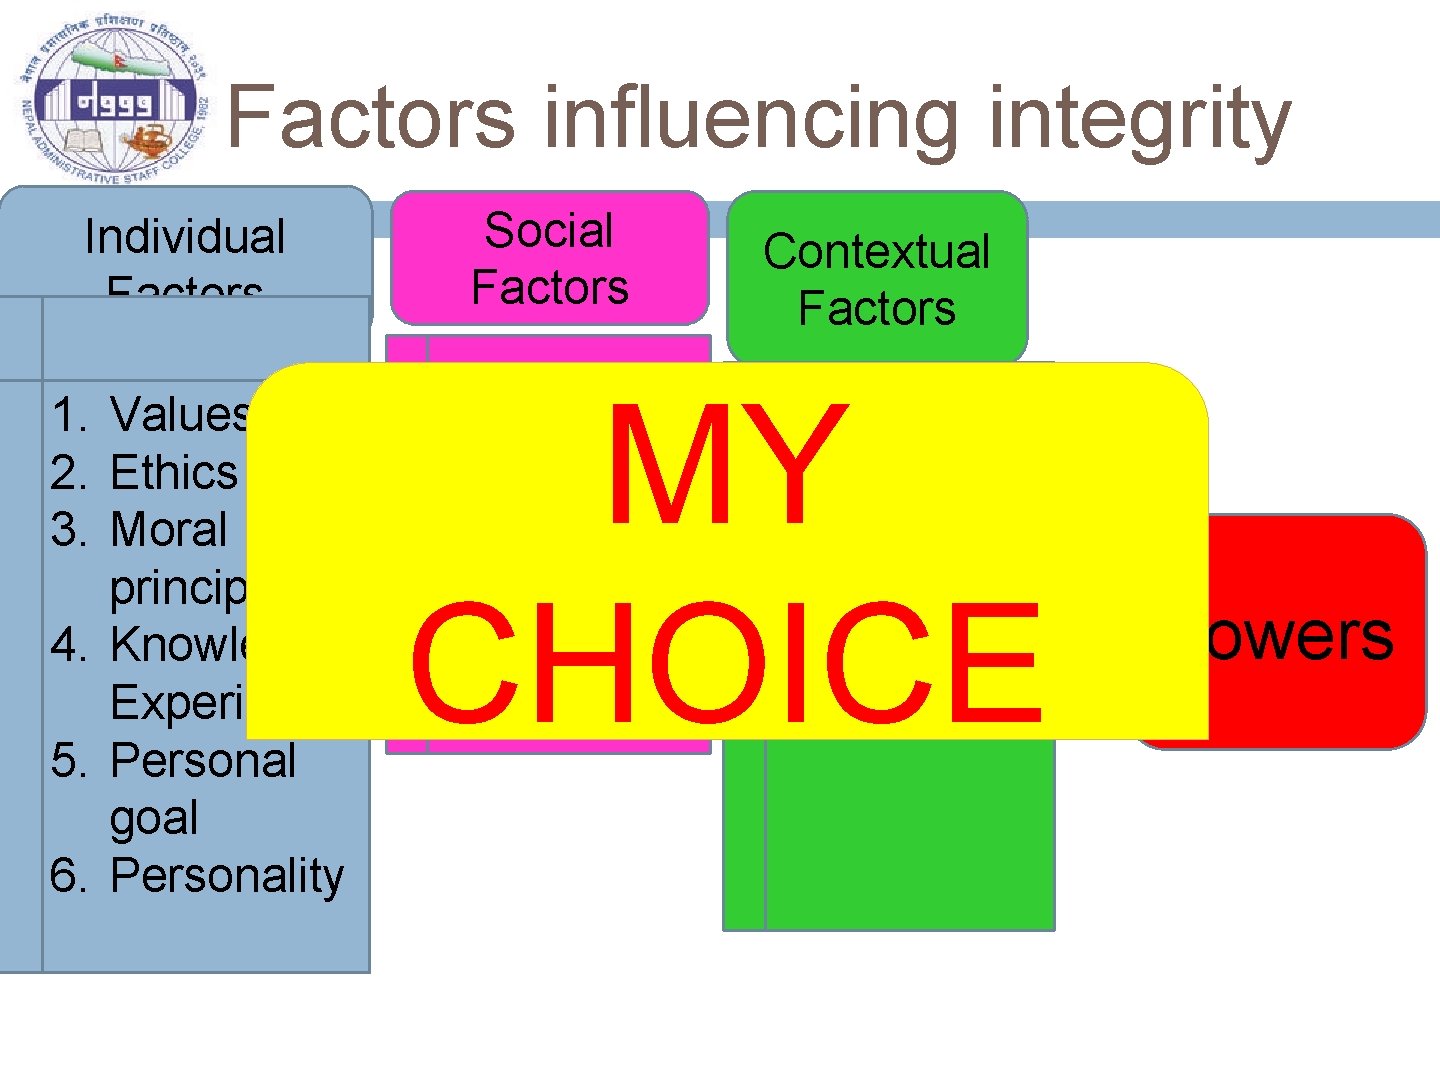 Factors influencing integrity Individual Factors 1. Values 2. Ethics 3. Moral principle 4. Knowledge/